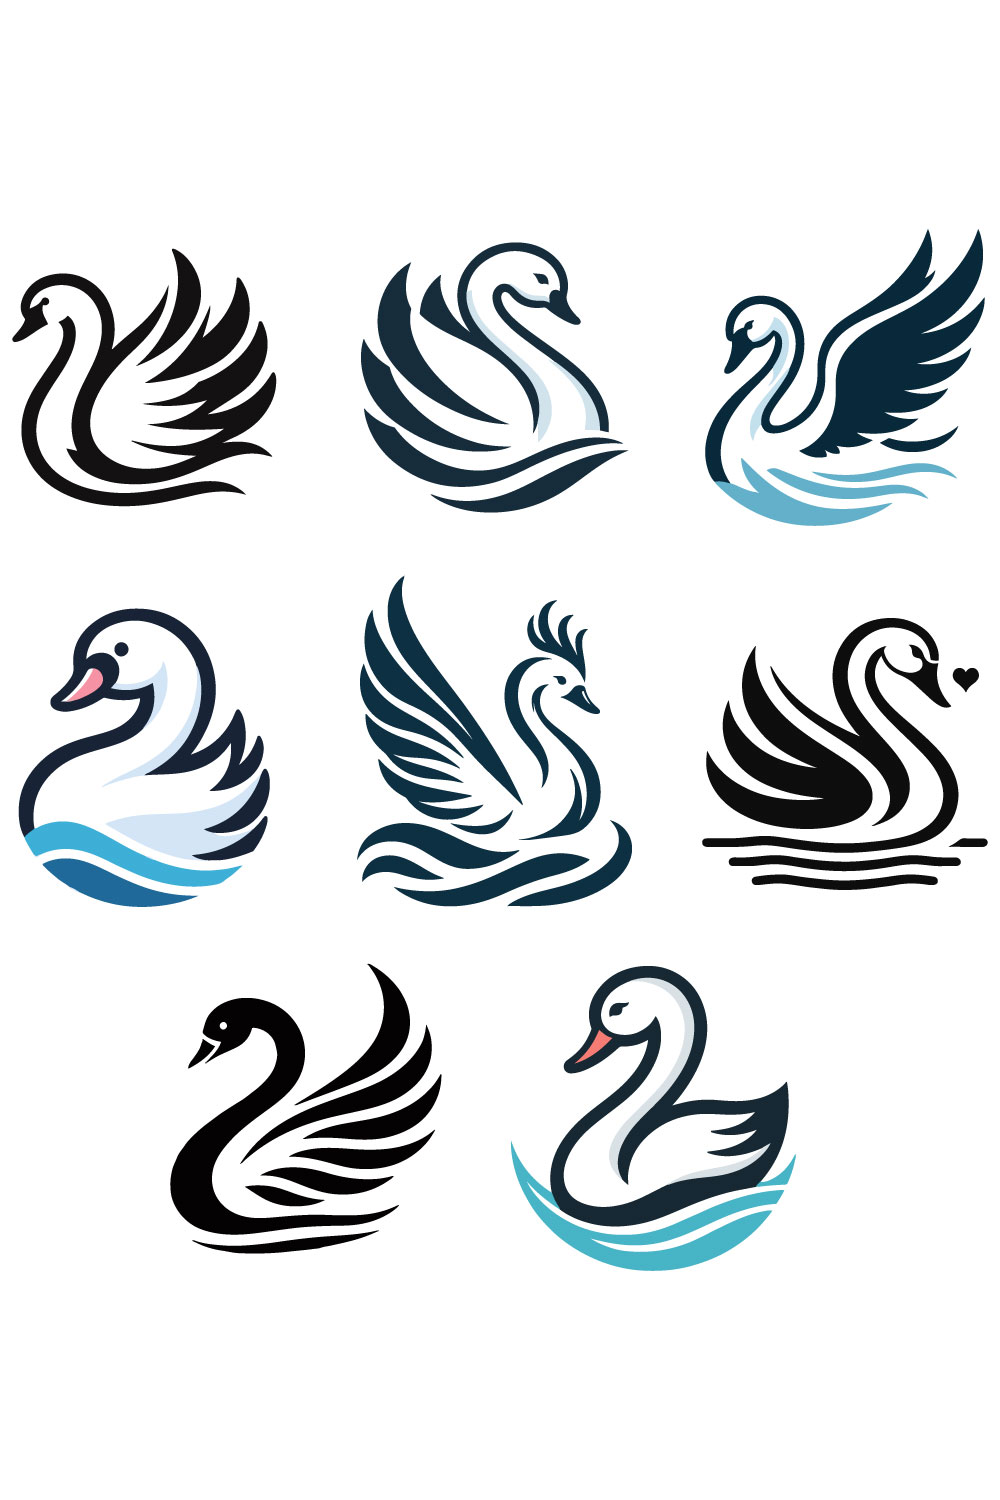 8 Swan Vector Logos Illustration pinterest preview image.